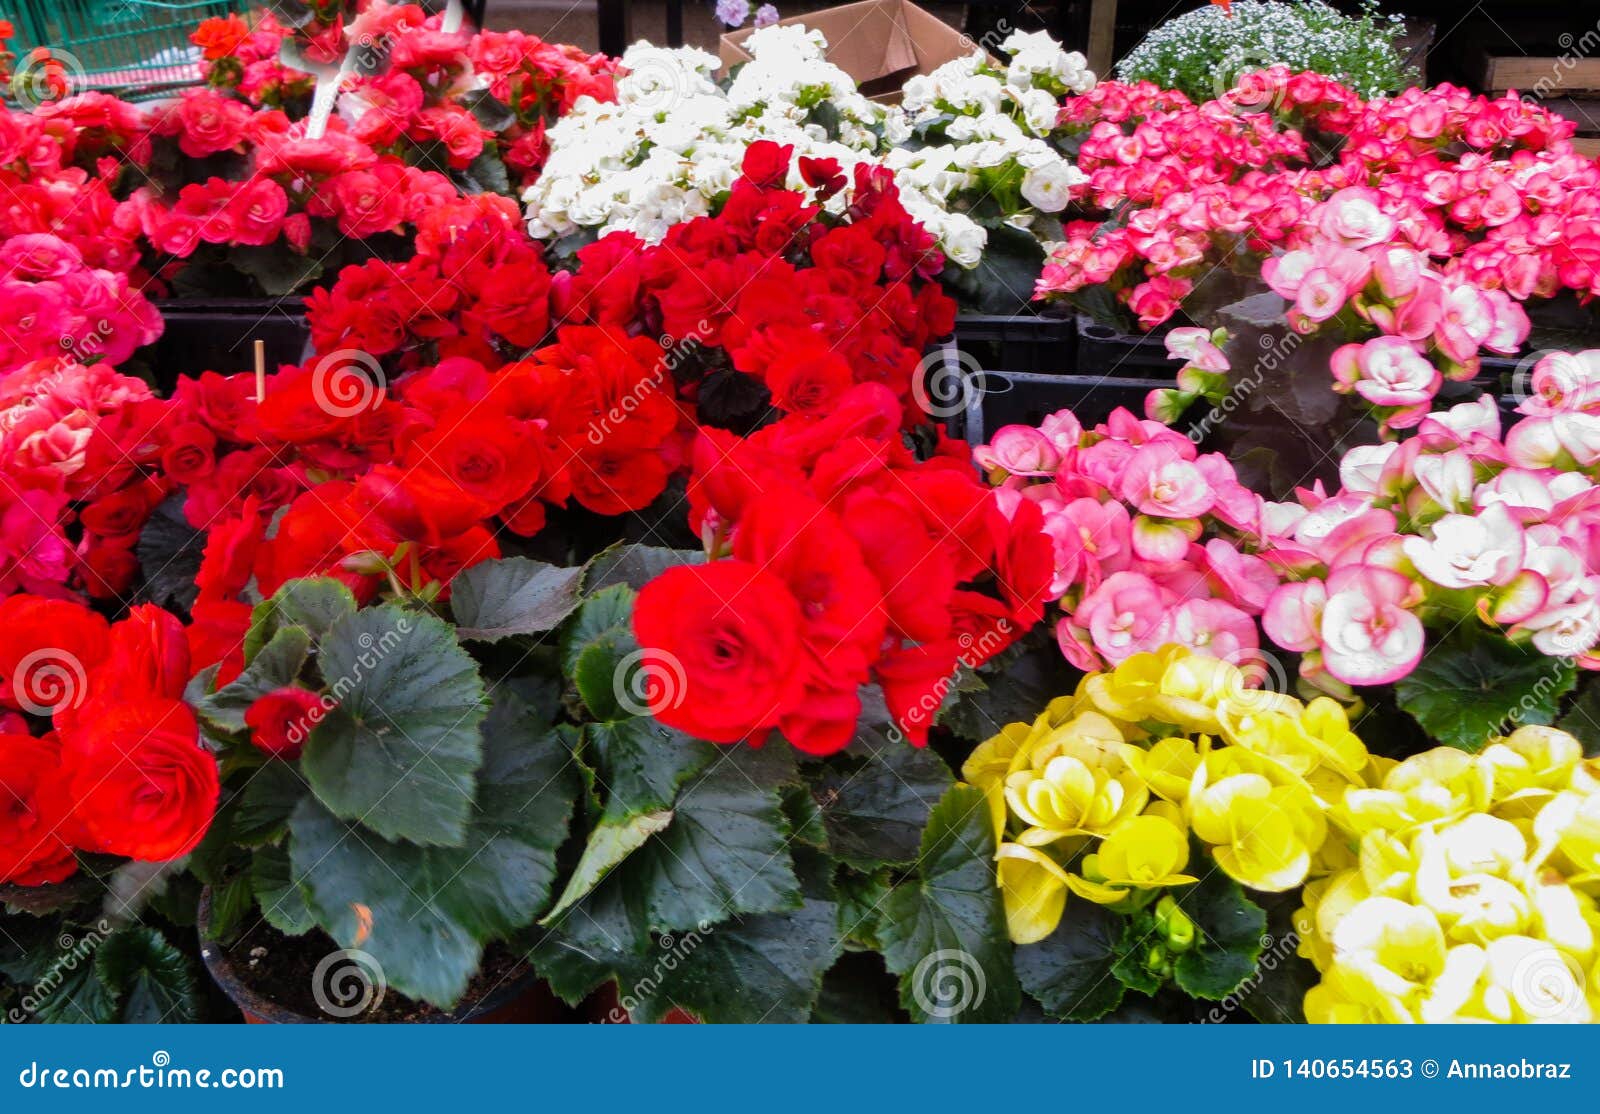 sale of flower seedlings on the market in riga.latvia